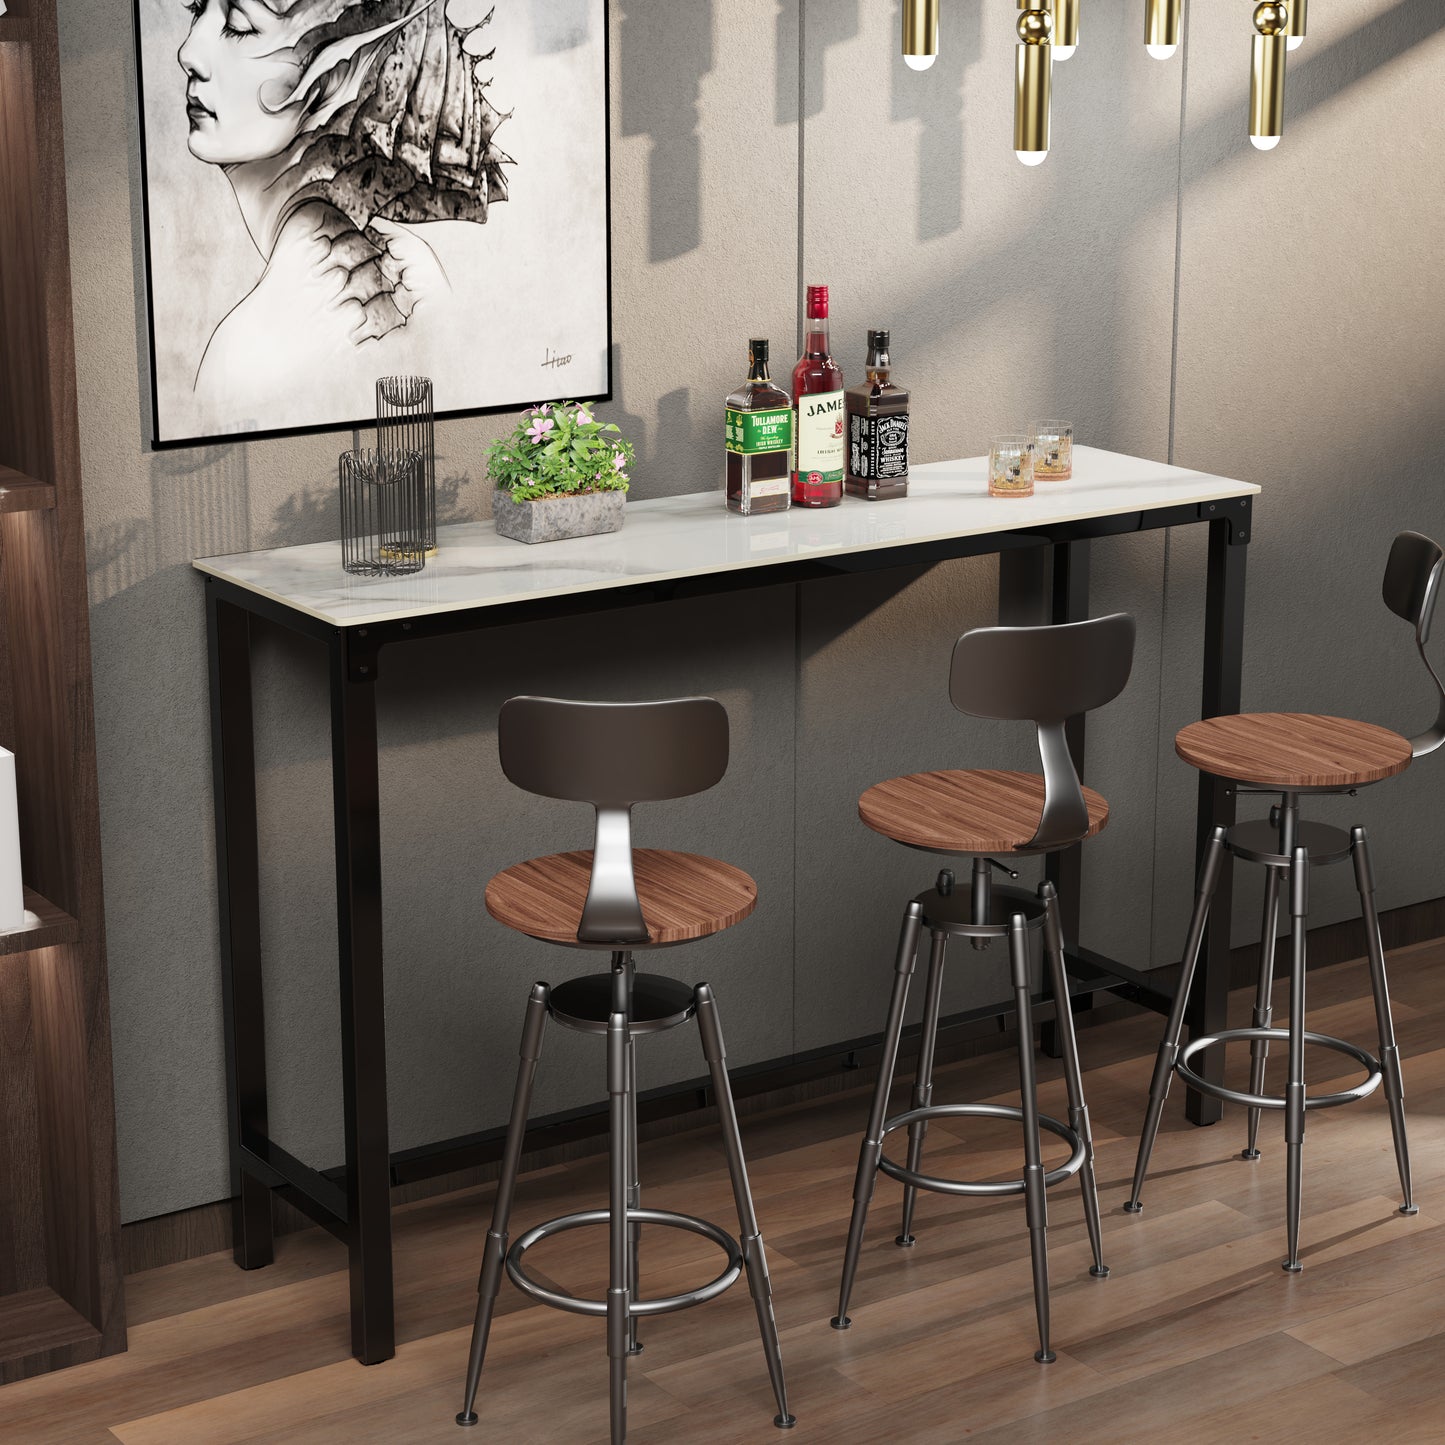 41.4” Tall Rectangular Bar Table Countertop Pub Table